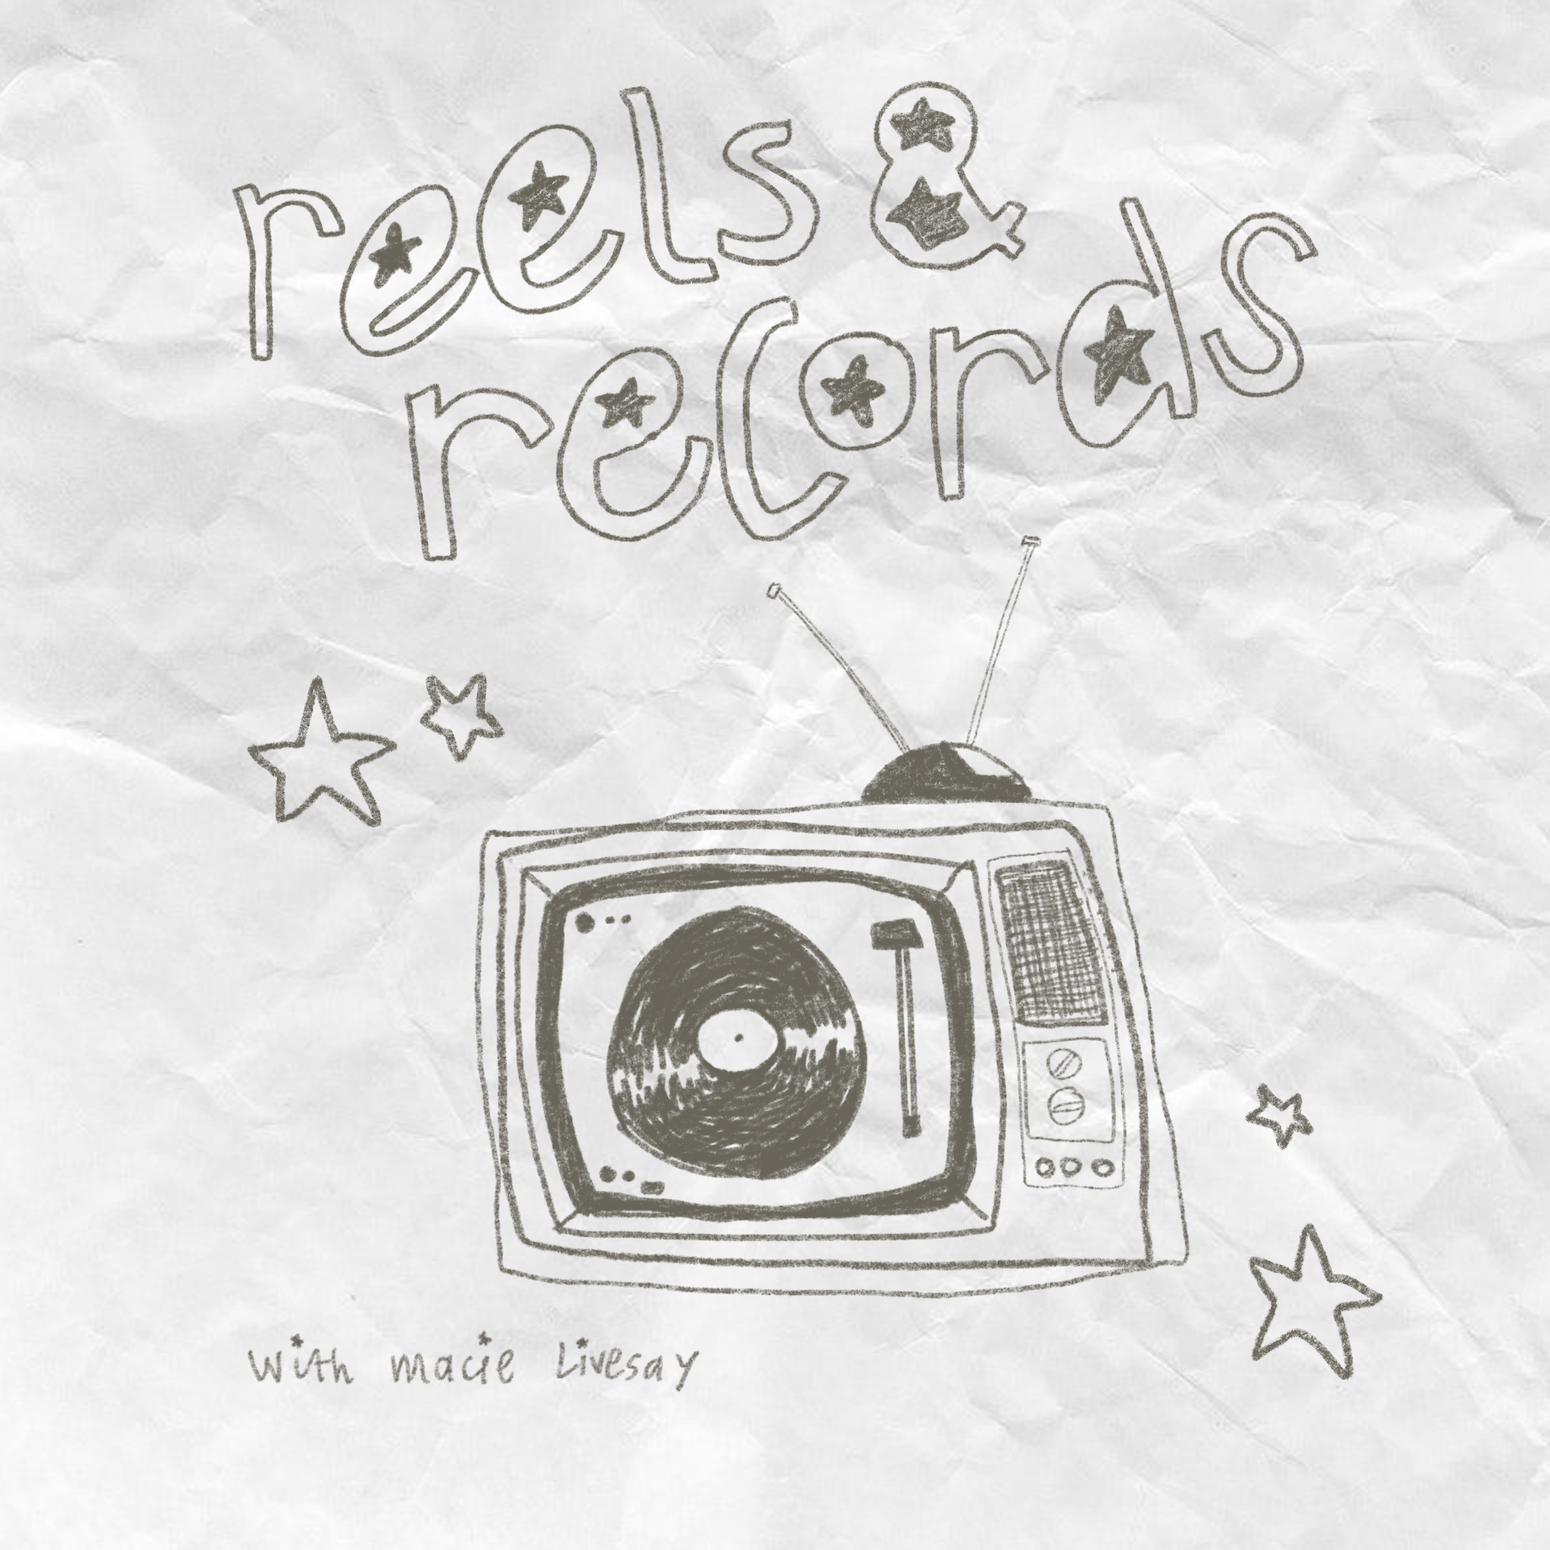 Artwork for reels & records